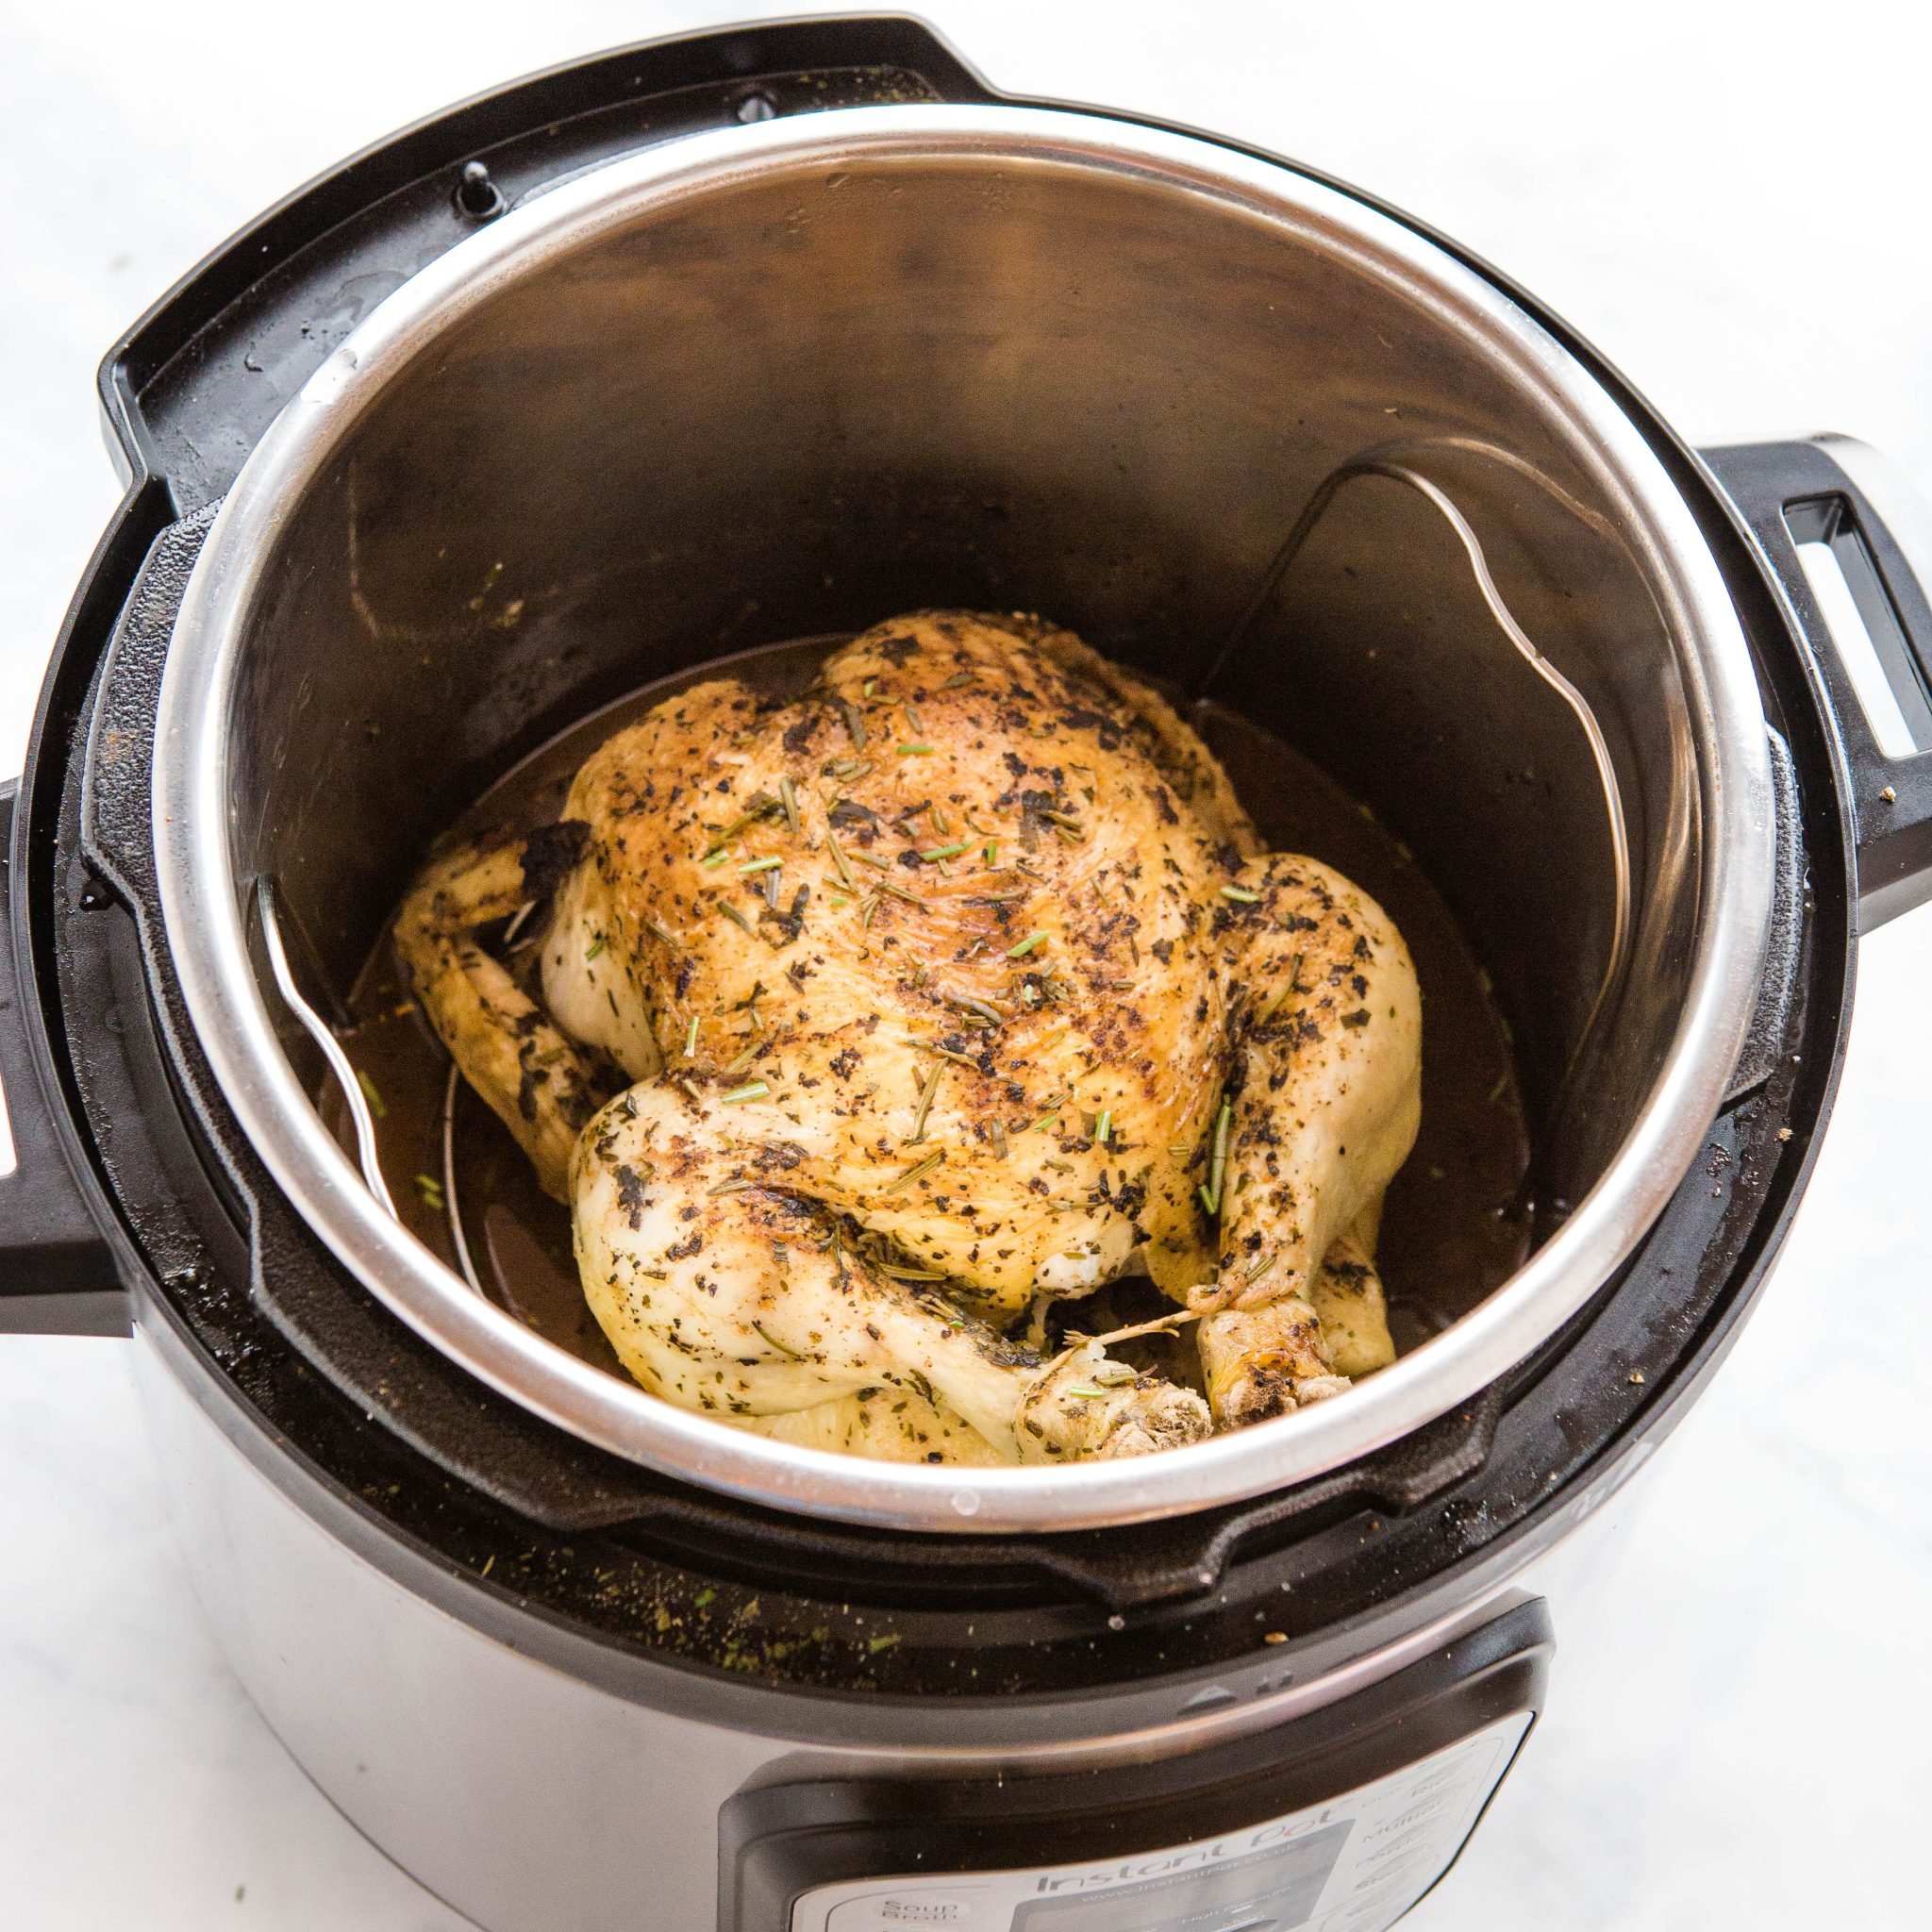 https://thebusybaker.ca/wp-content/uploads/2021/01/instant-pot-roast-chicken-and-gravy-fb-ig-1-scaled.jpg